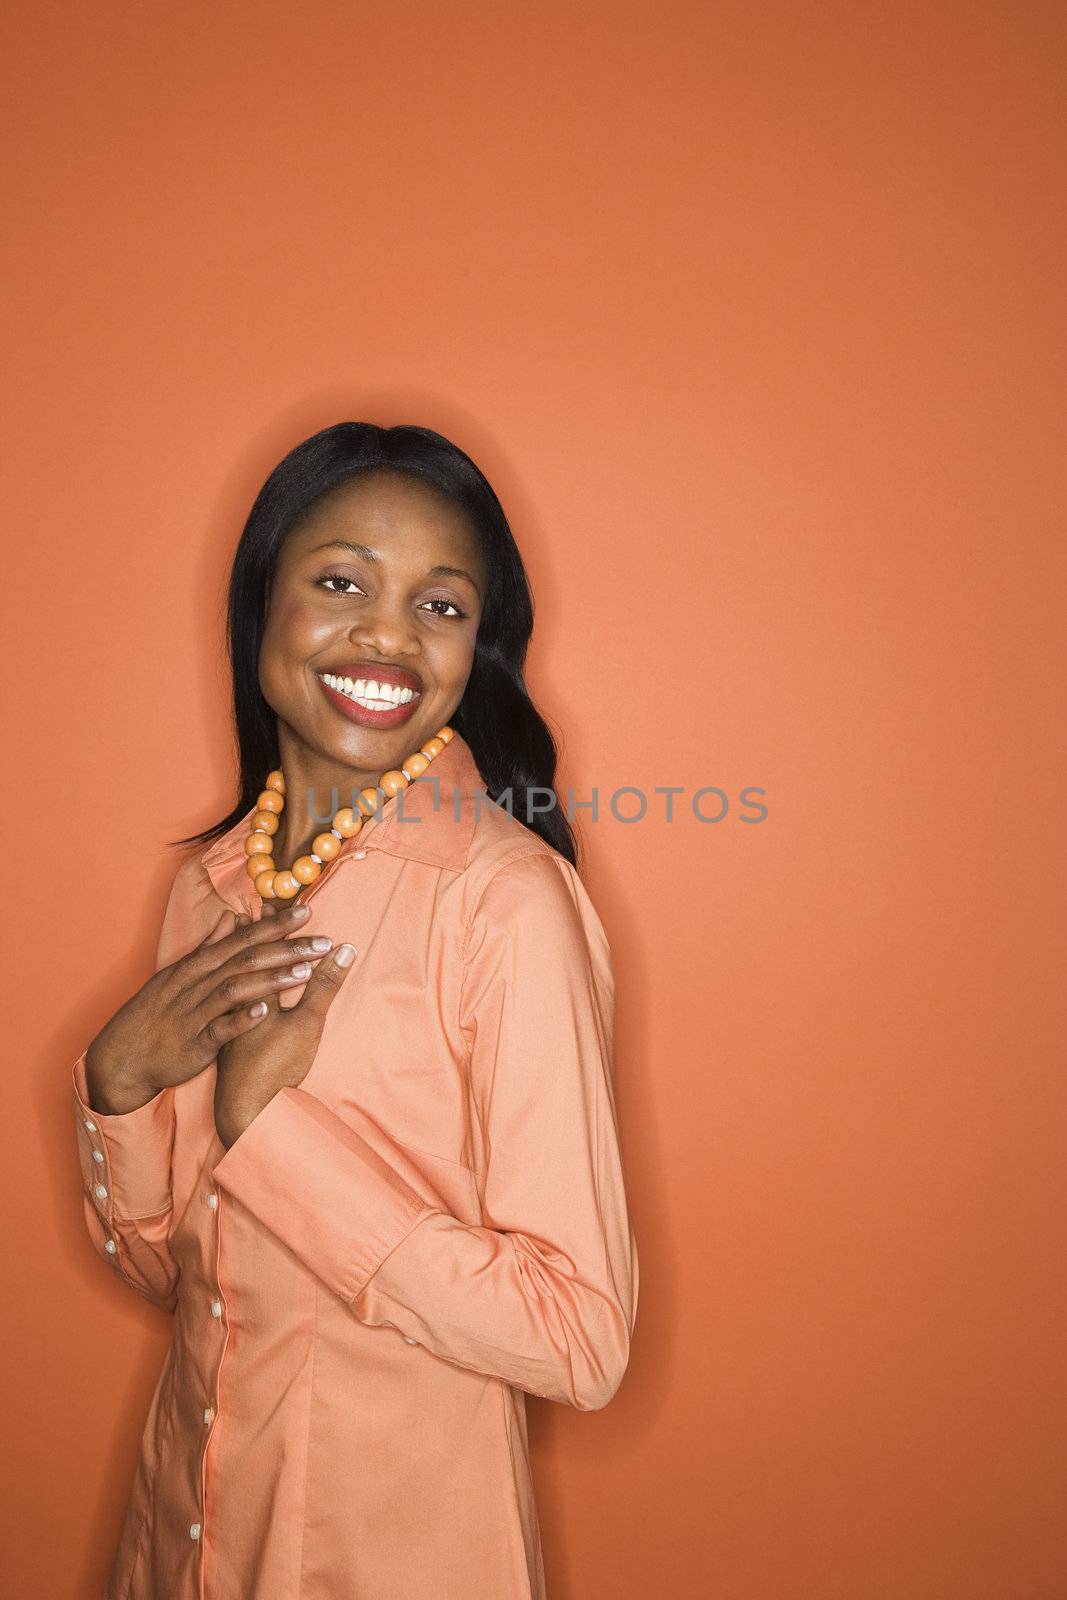 African-American mid-adult woman on orange background wearing orange clothing.